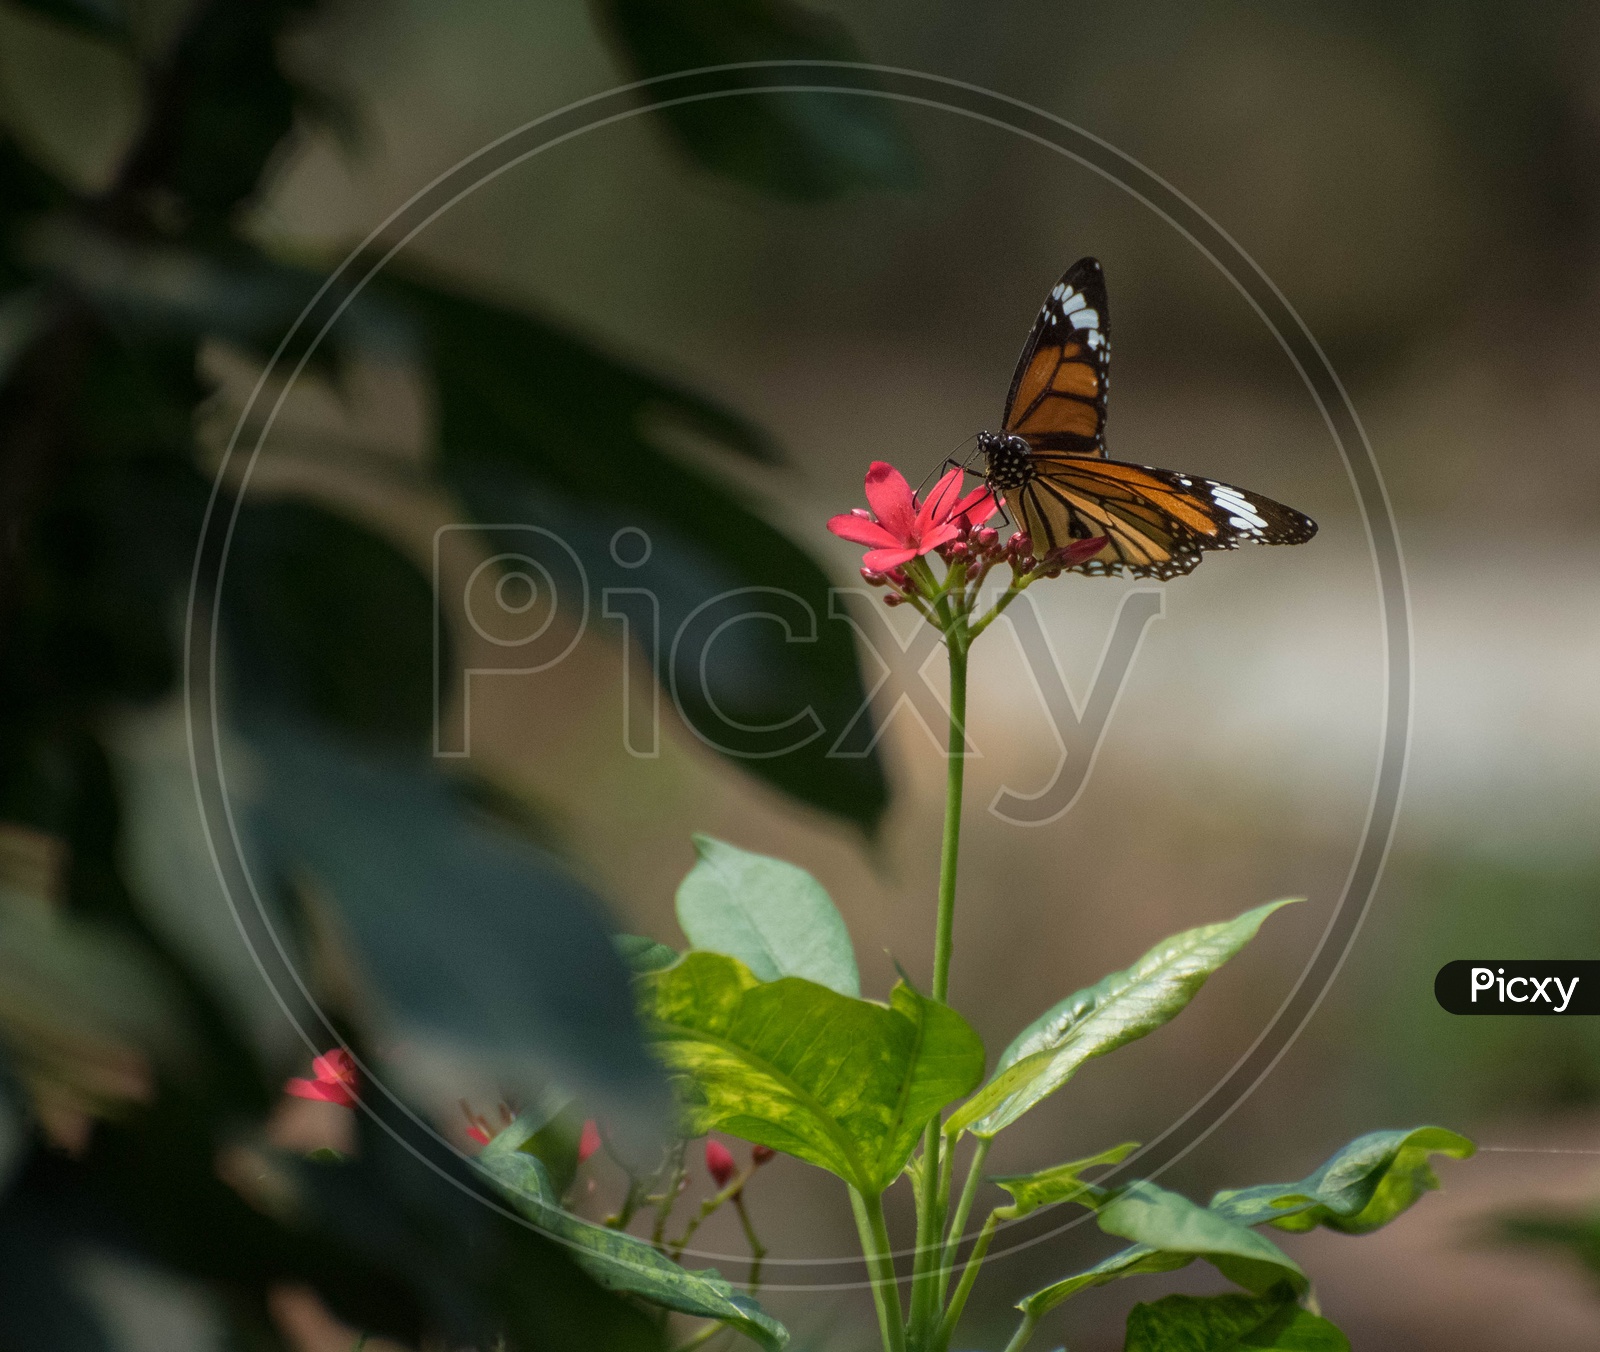 Butterfly in Butterfly world, Indira gandhi zoo